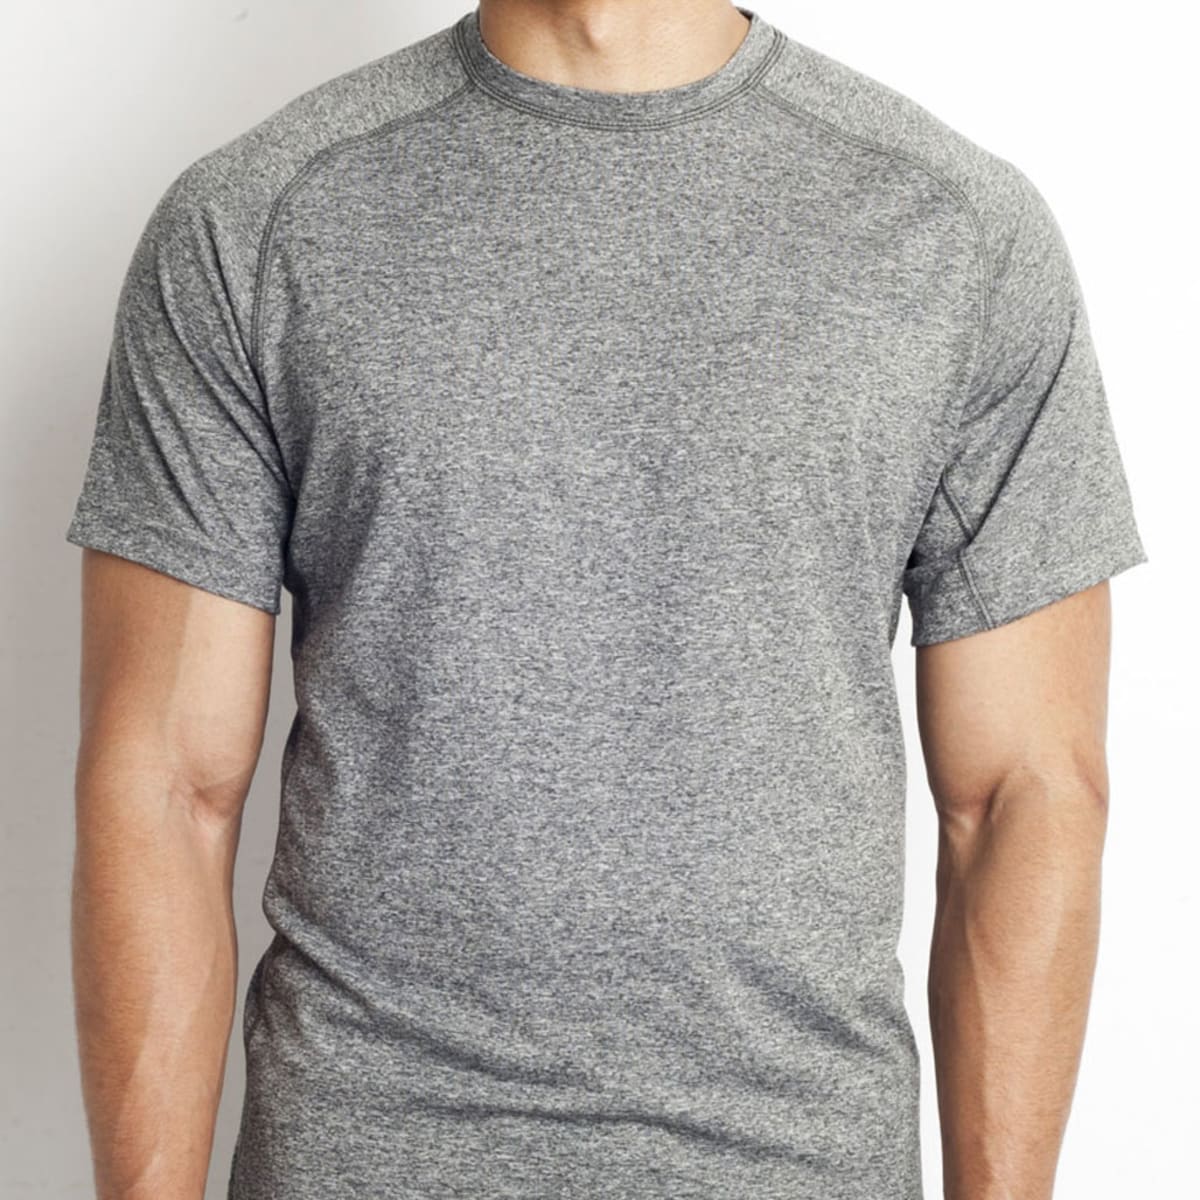 10 Best Muscle Fit T-Shirts - Men's Journal